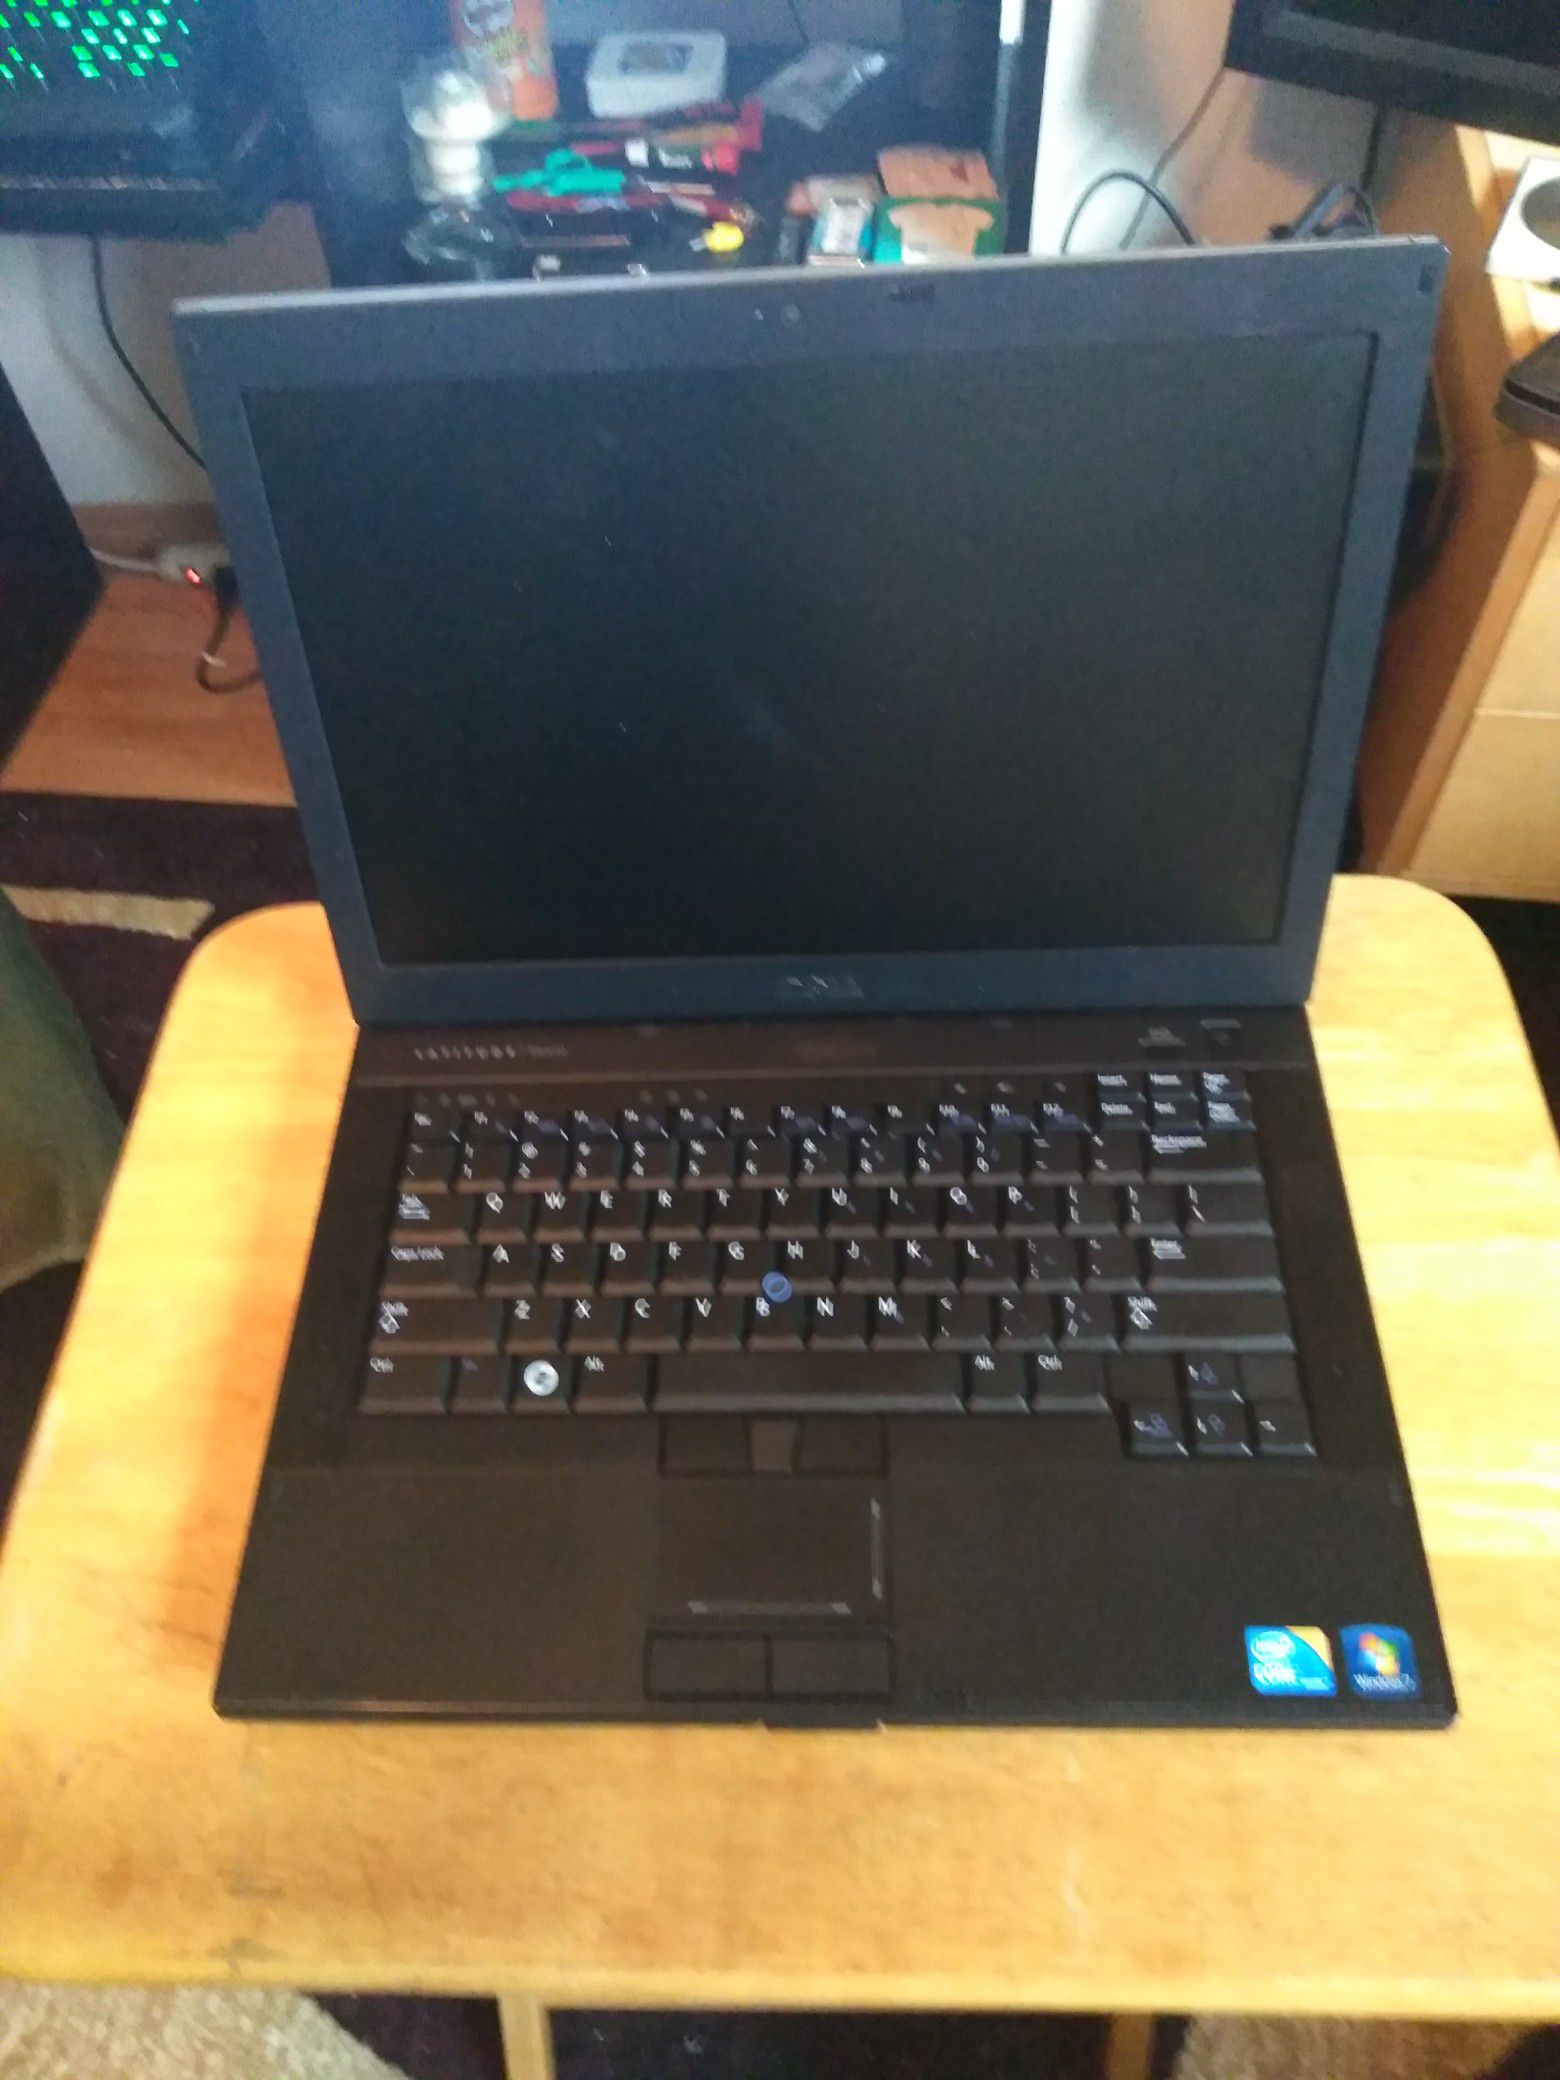 Dell Latitude E6410 Laptop / Intel i5 Processor / Bad Video Card For Parts Or Repair~Fix